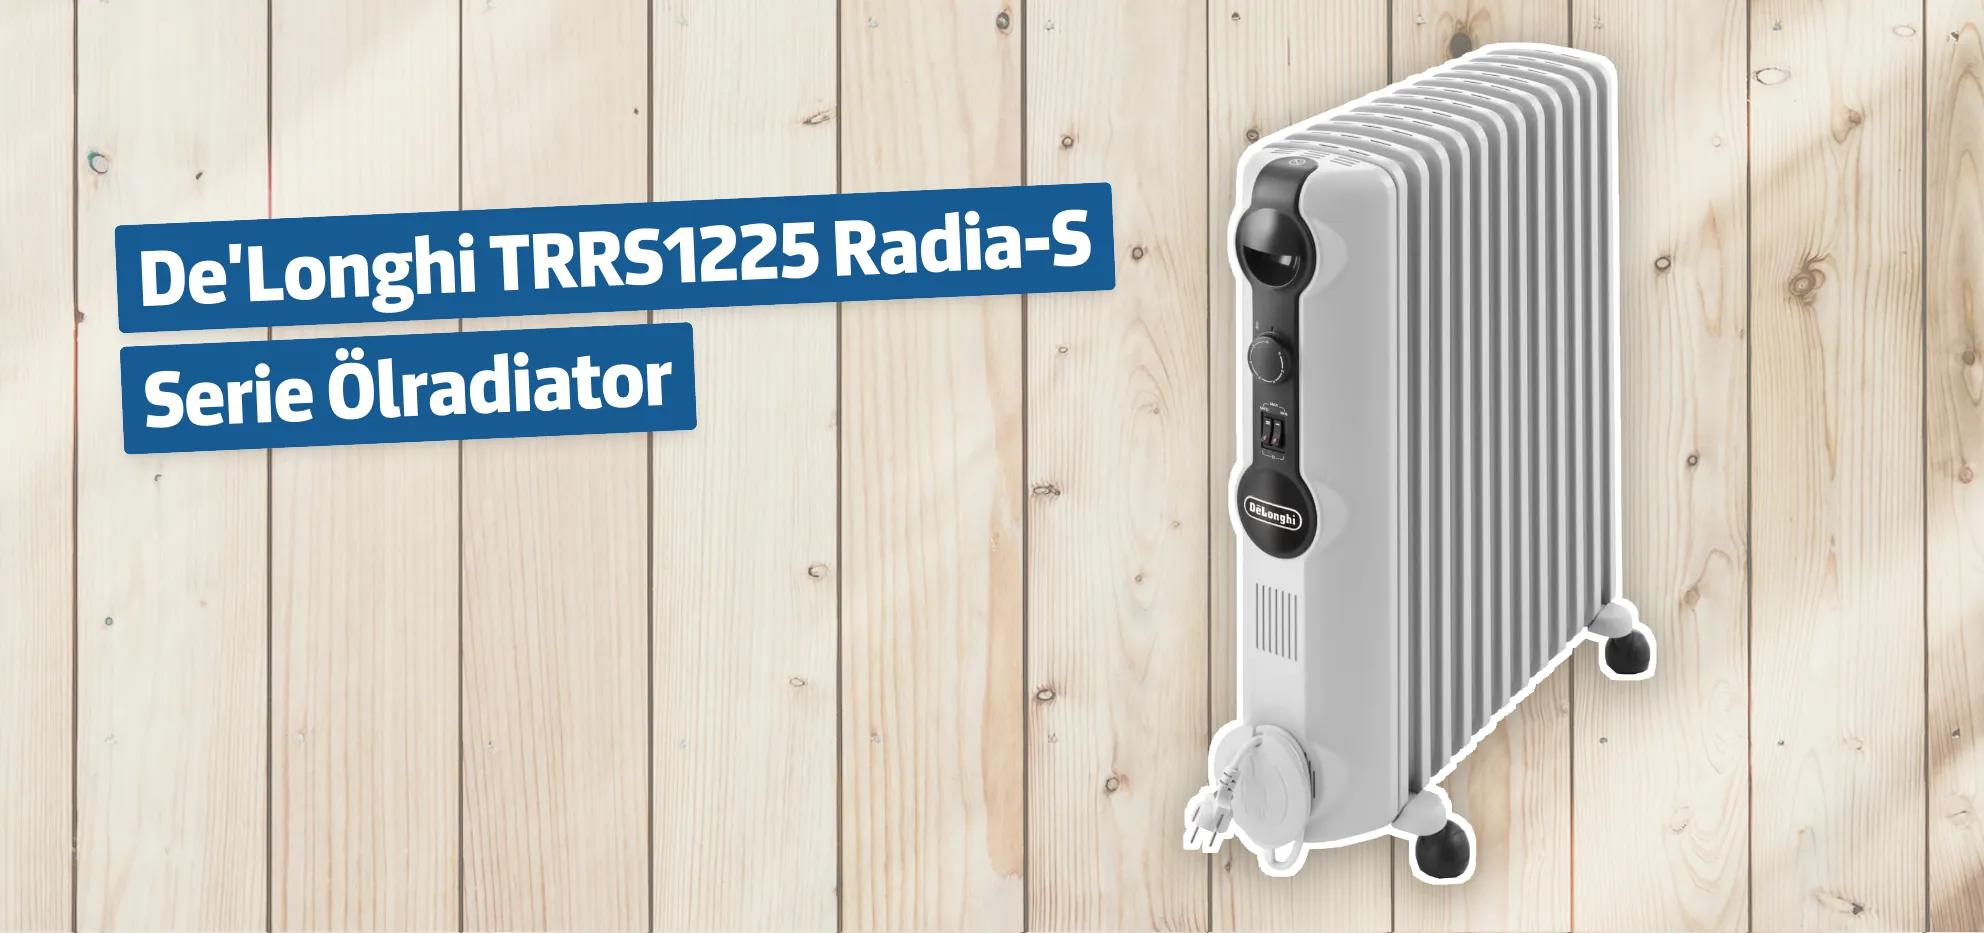 De'Longhi TRRS1225 Radia-S Serie Ölradiator